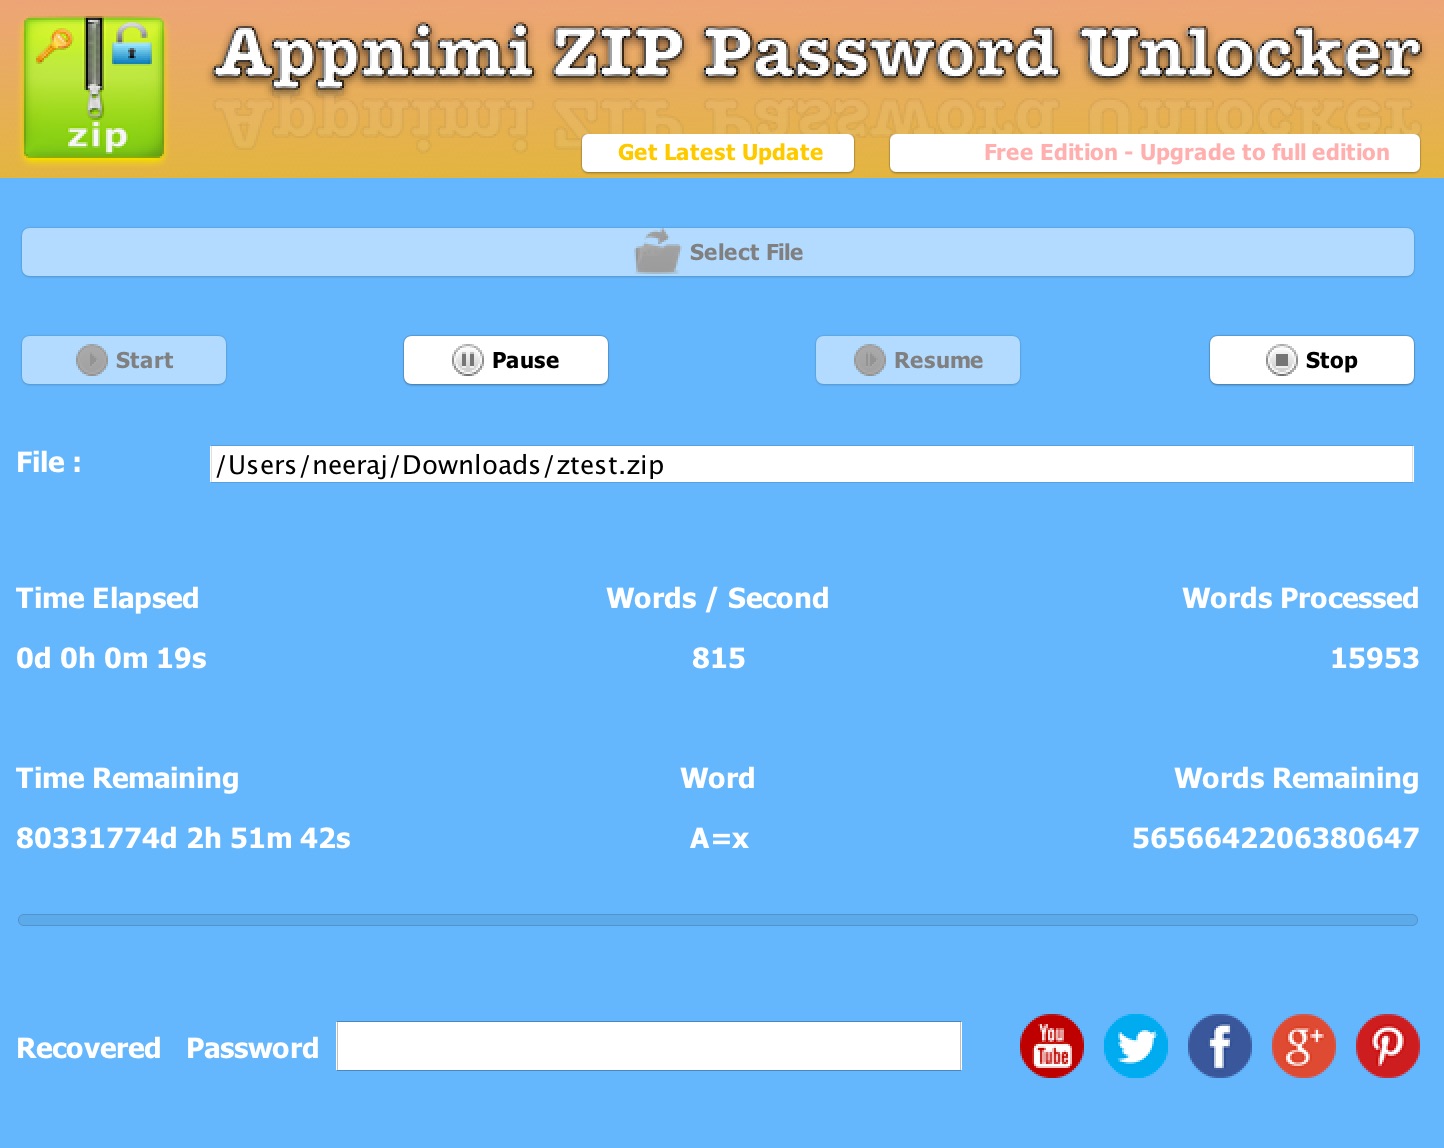 Appnimi ZIP Password Unlocker - Recovery In Progress